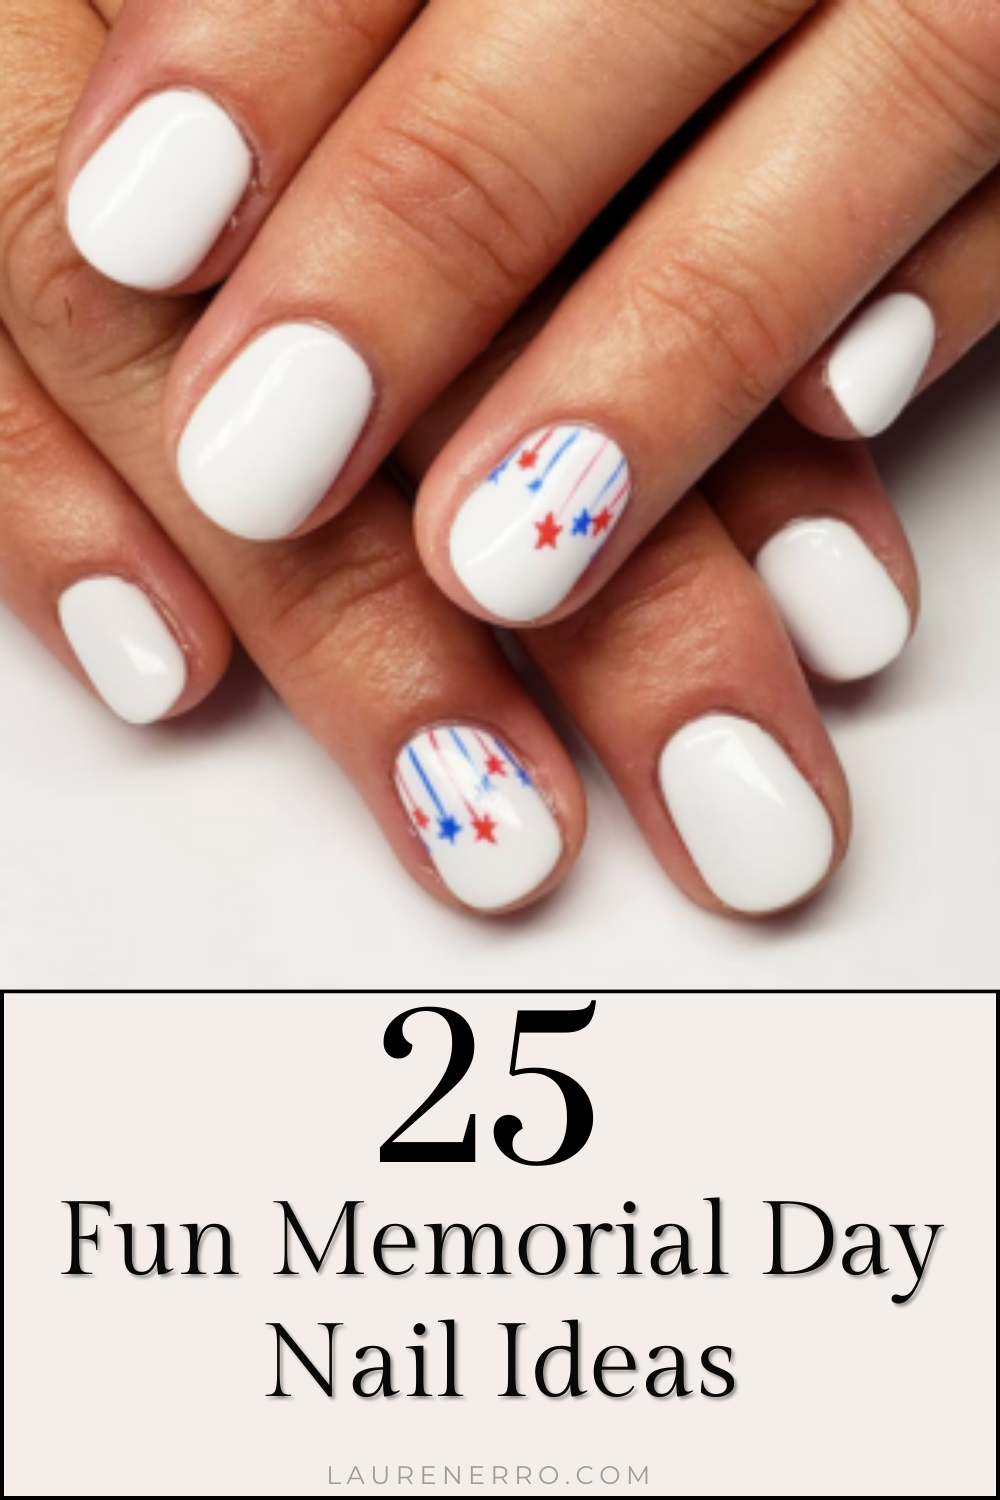 25 Fun Memorial Day Nail Ideas